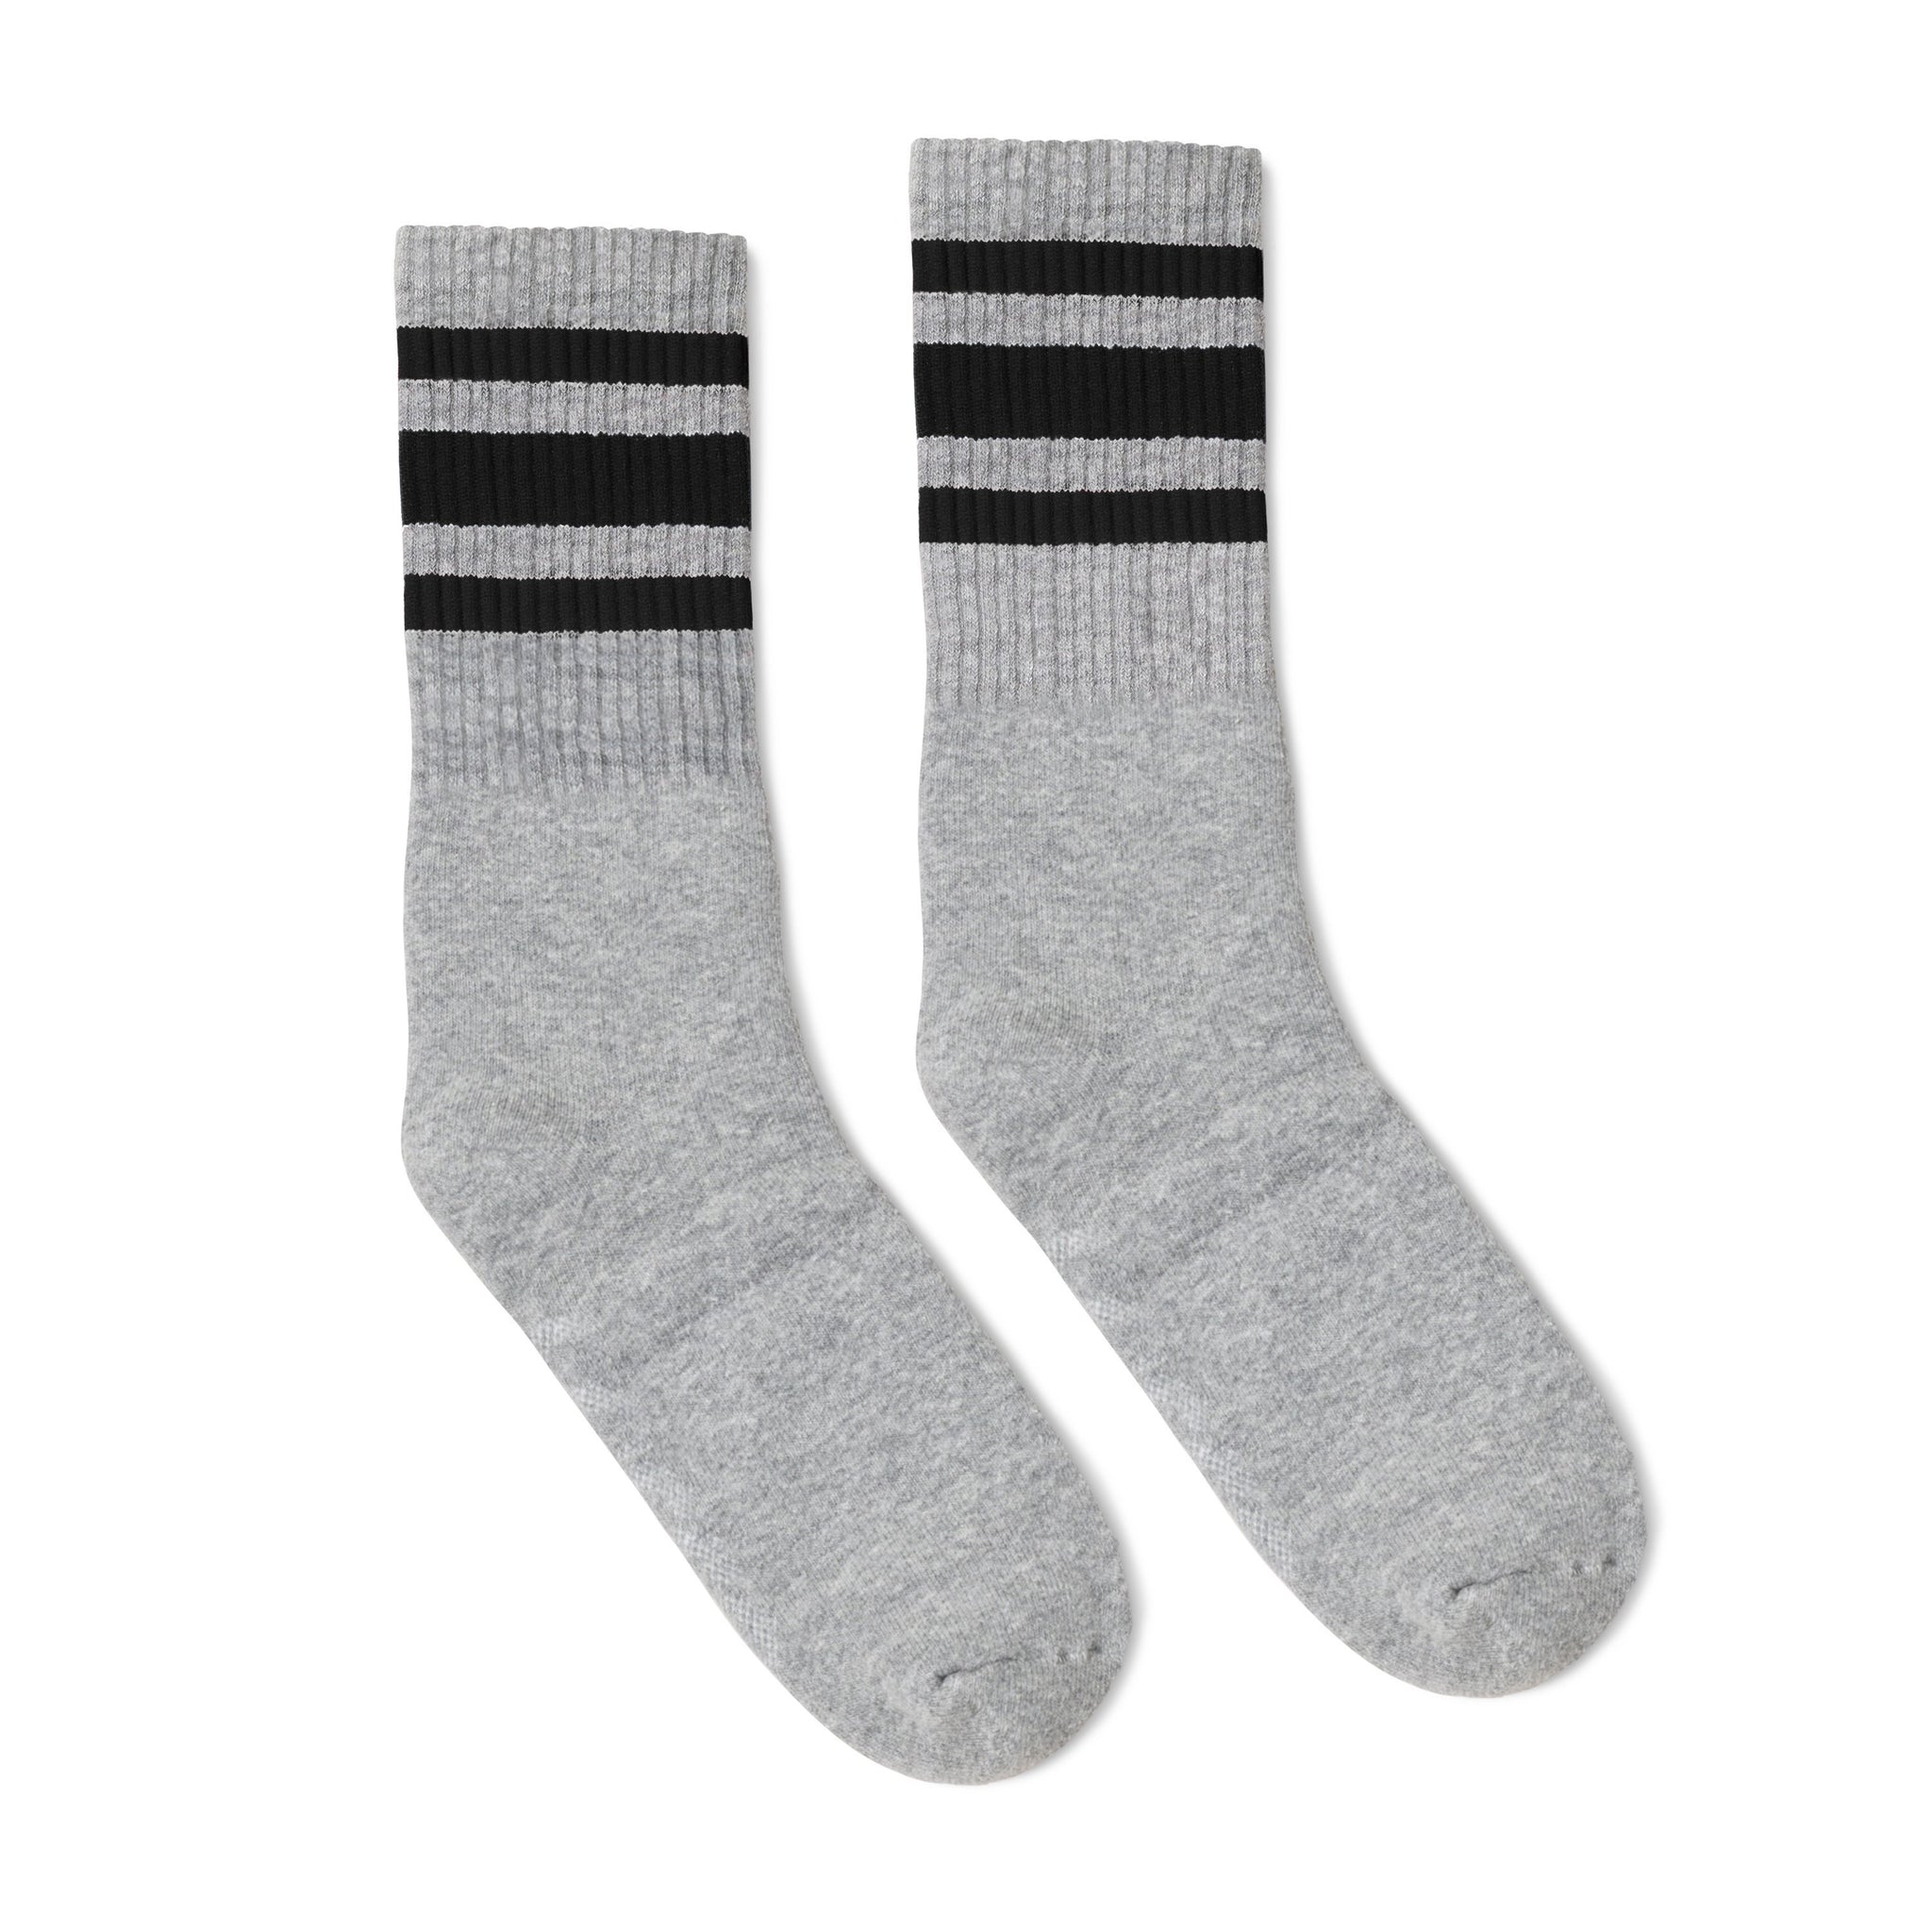 grey socks be lighter or darker then dark grey pants